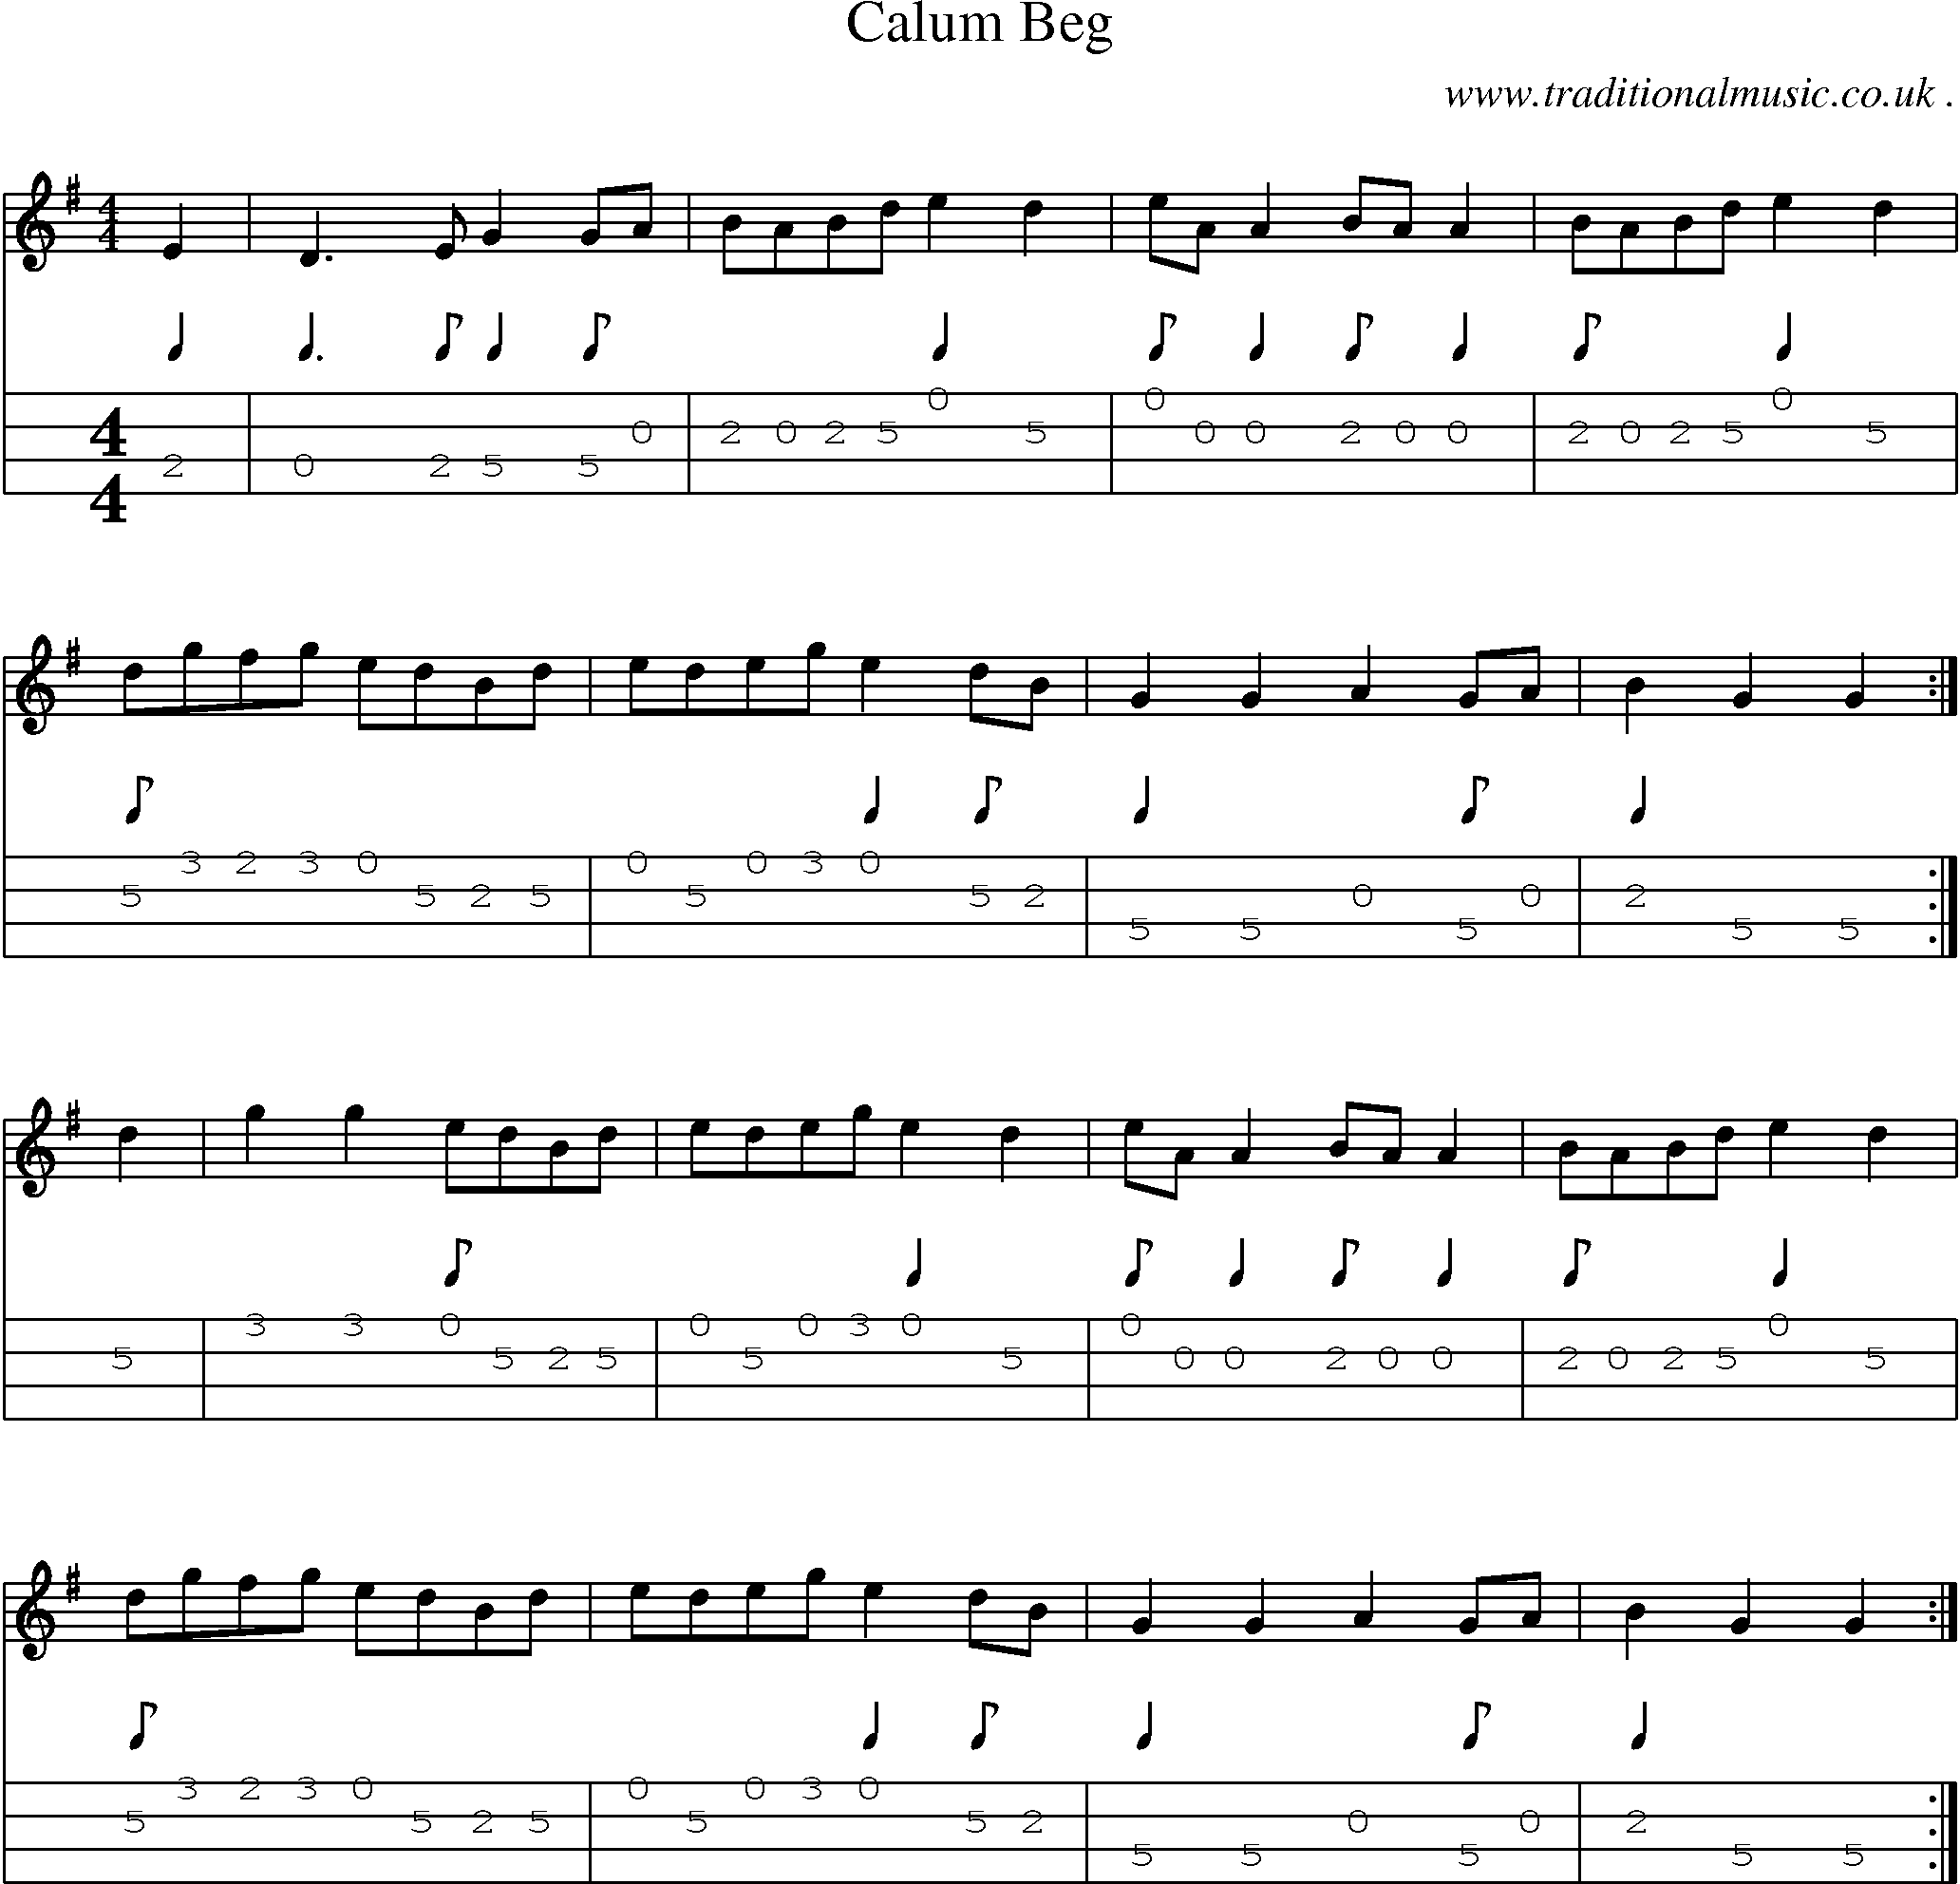 Sheet-music  score, Chords and Mandolin Tabs for Calum Beg